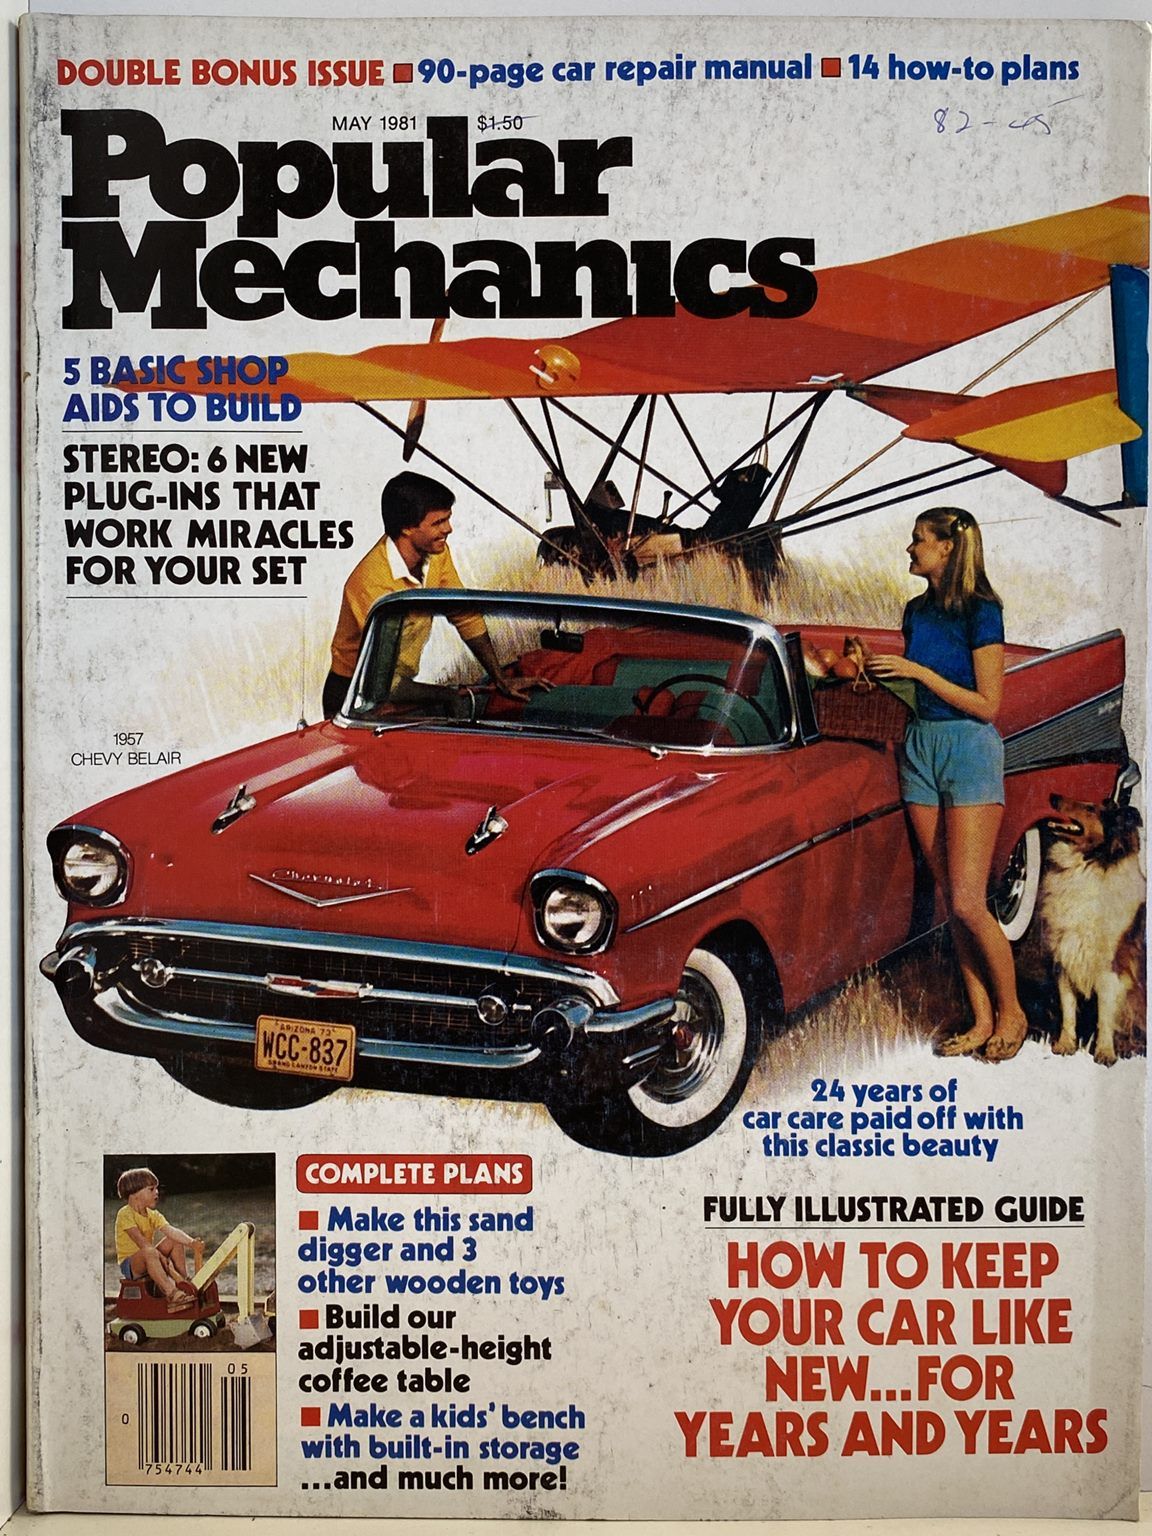 VINTAGE MAGAZINE: Popular Mechanics - Vol. 155, No. 5 - May 1981